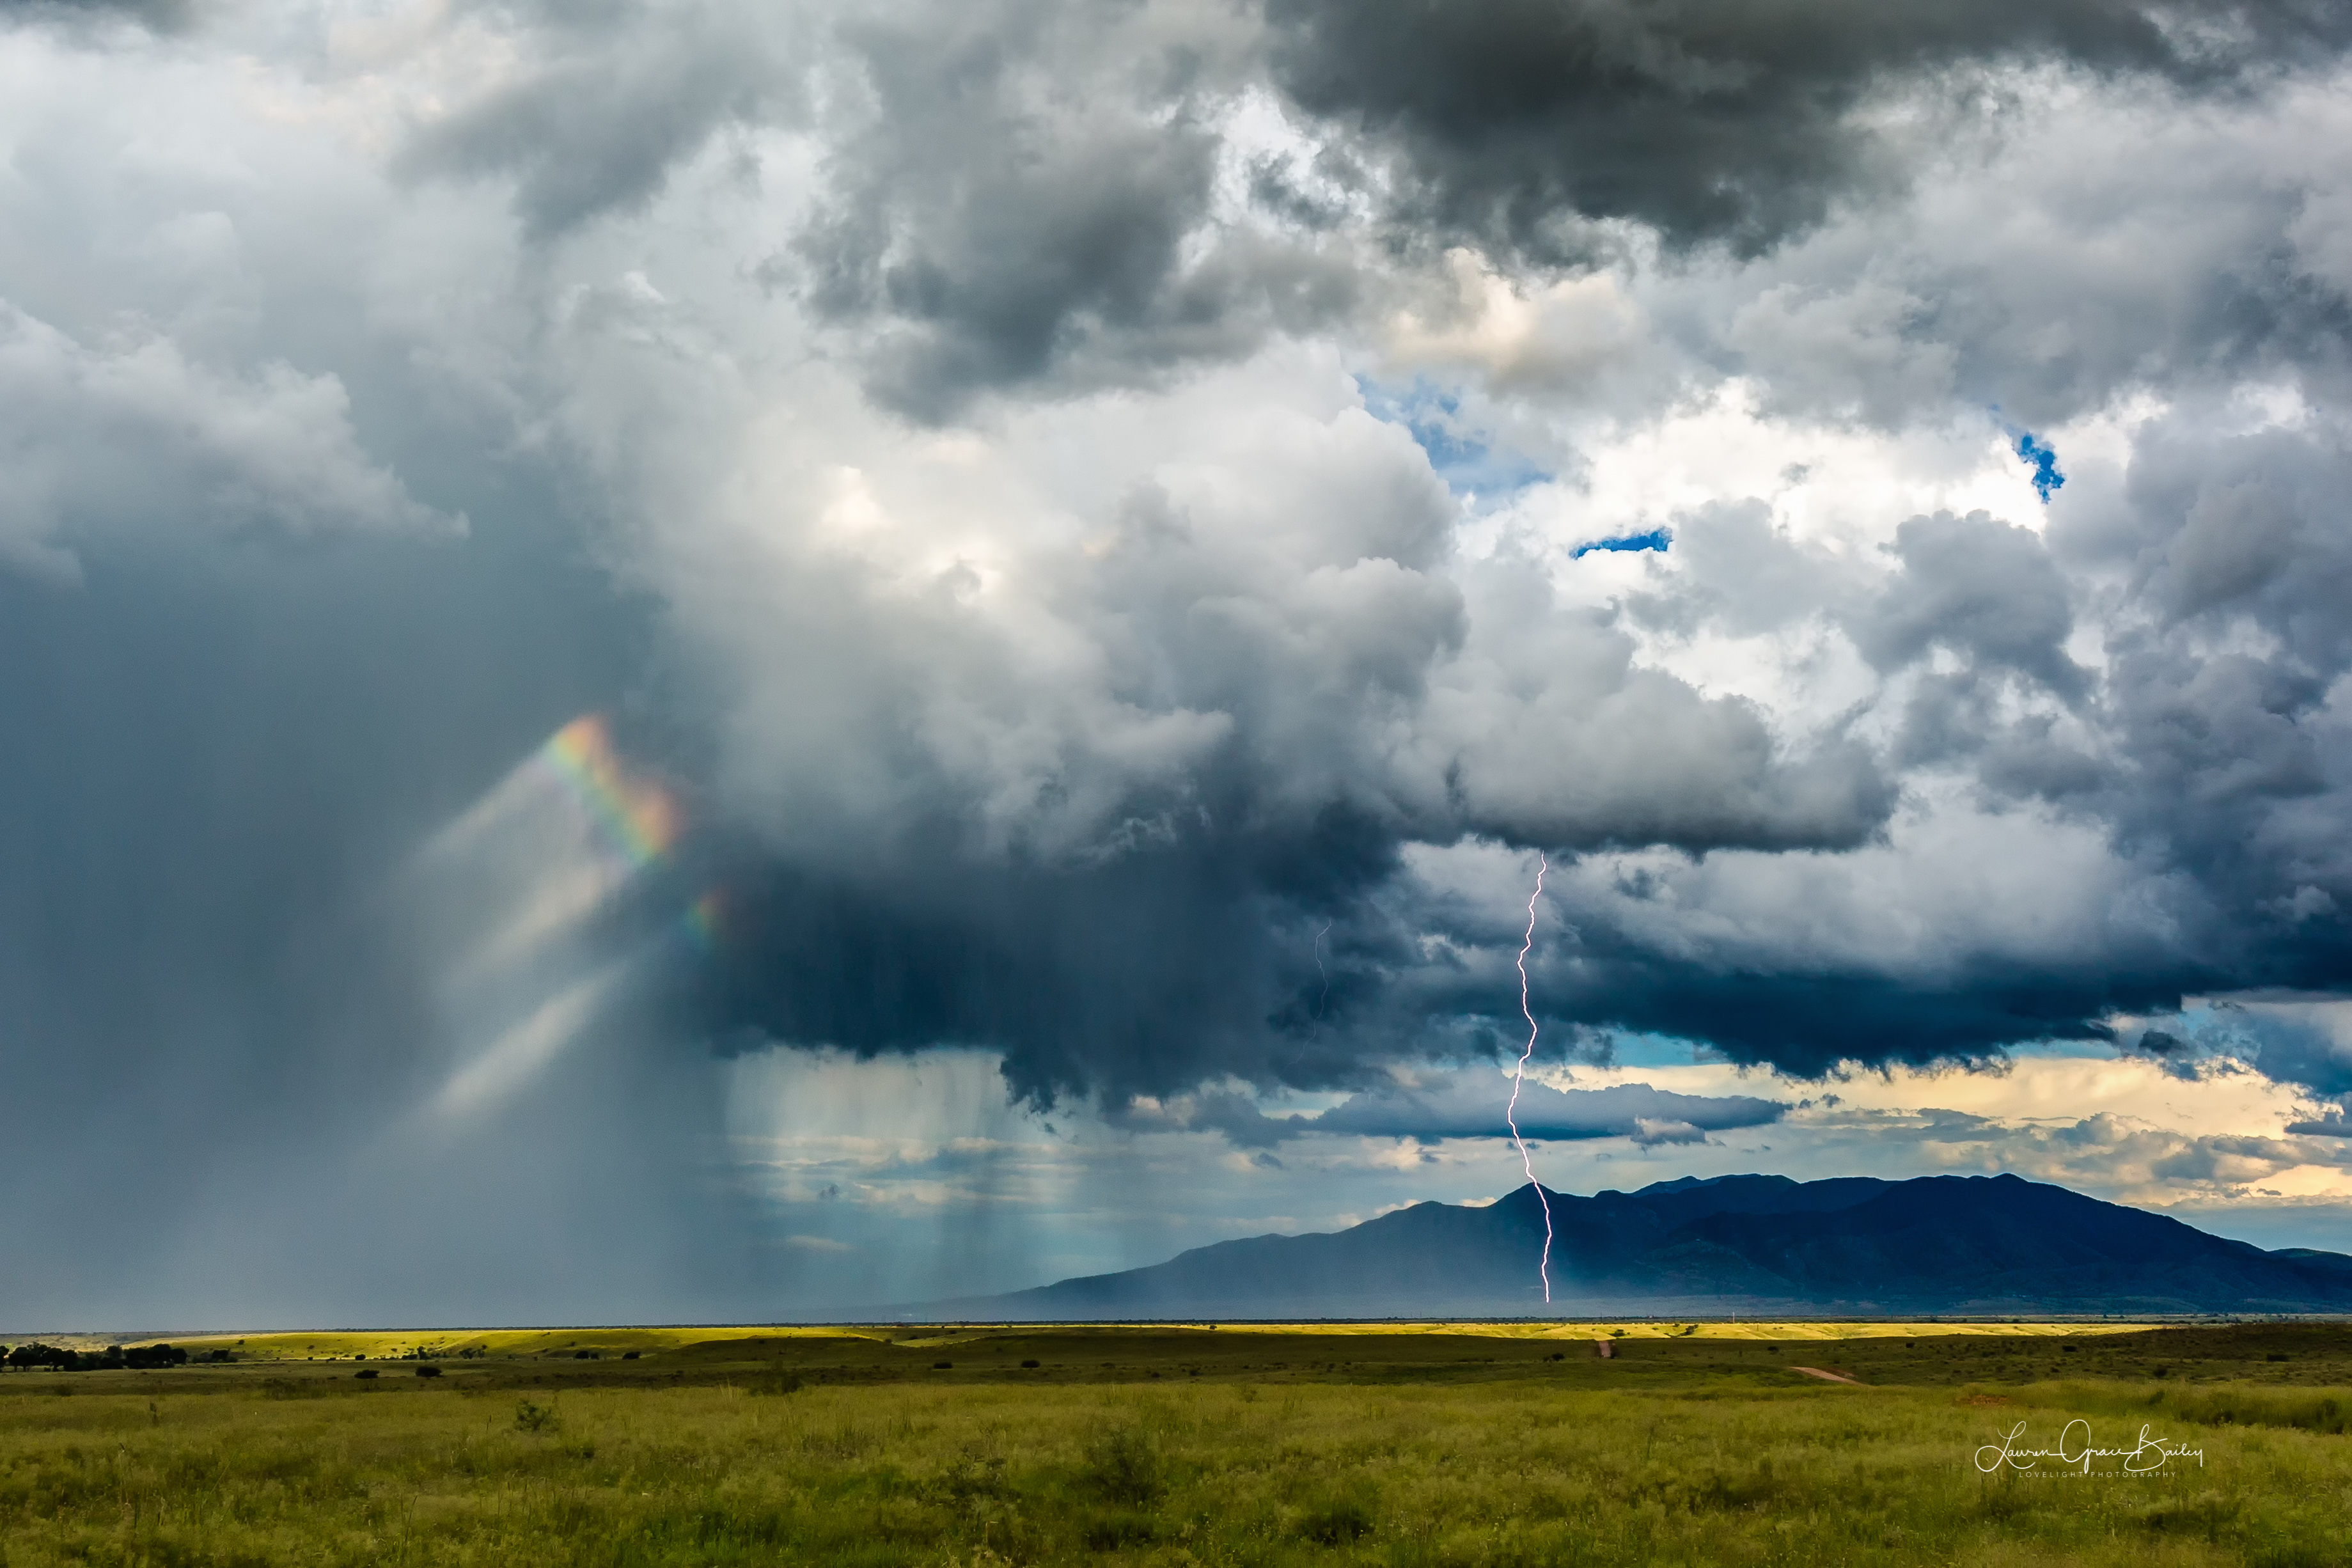 Rainbow and Lightning during storm near Elgin, Arizona by Lori Grace Bailey @lorigraceaz